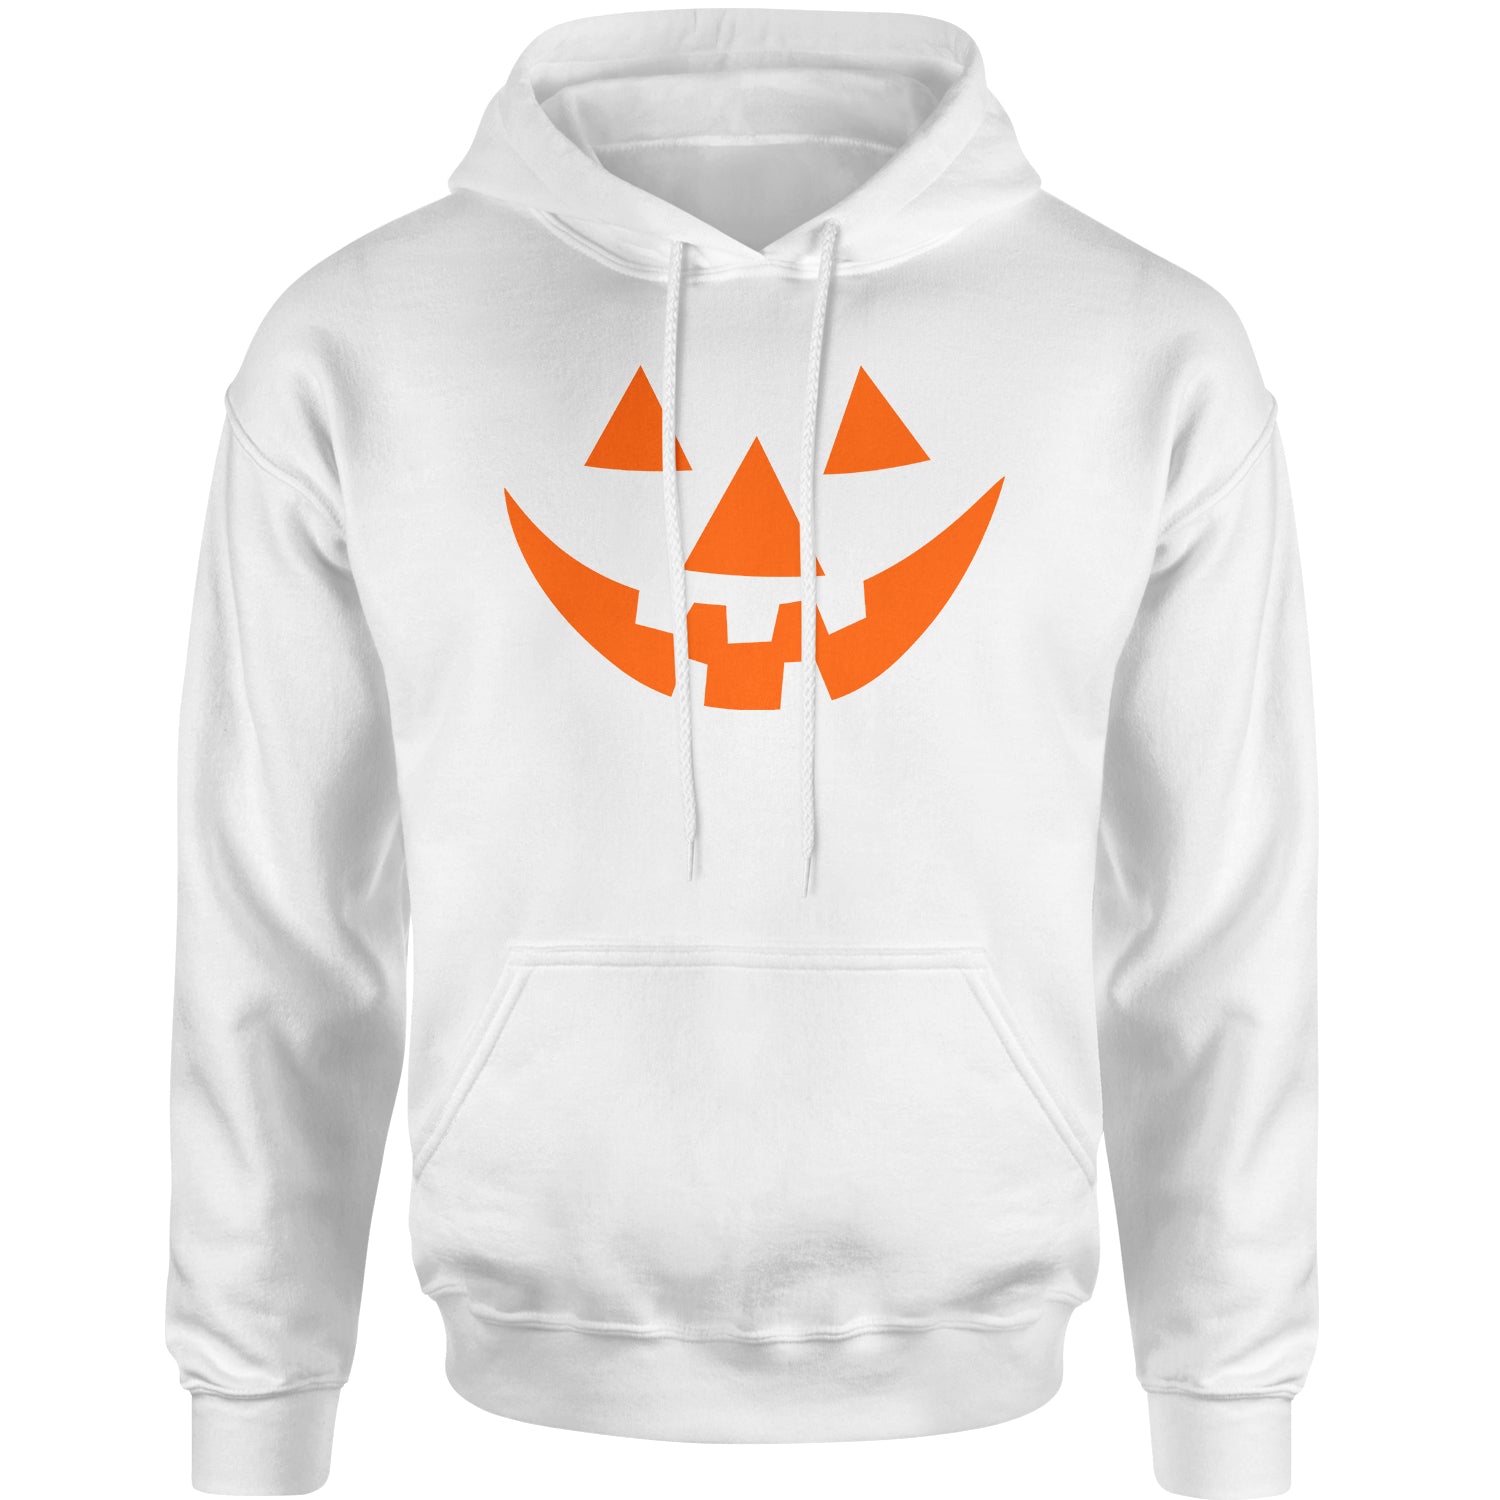 Pumpkin Face (Orange Print) Adult Hoodie Sweatshirt costume, dress, dressup, eve, halloween, hallows, jackolantern, party, up by Expression Tees